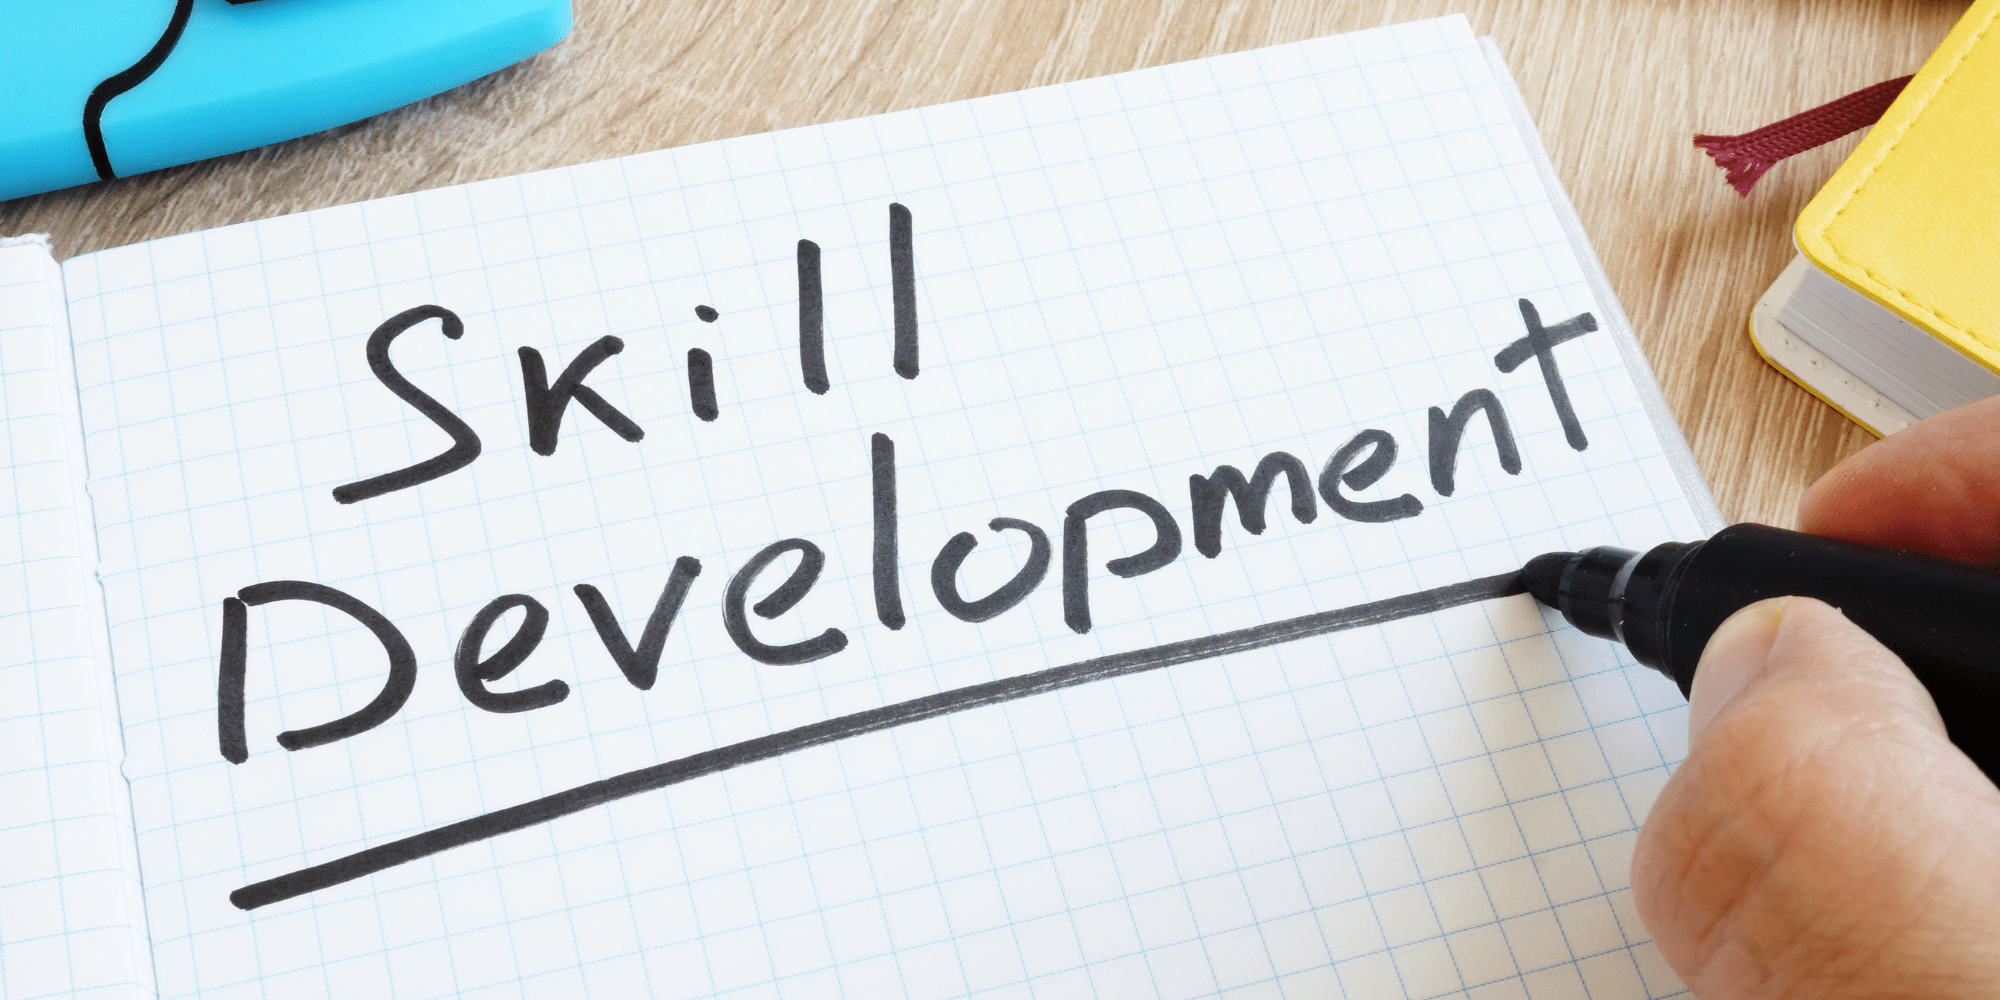 skill development